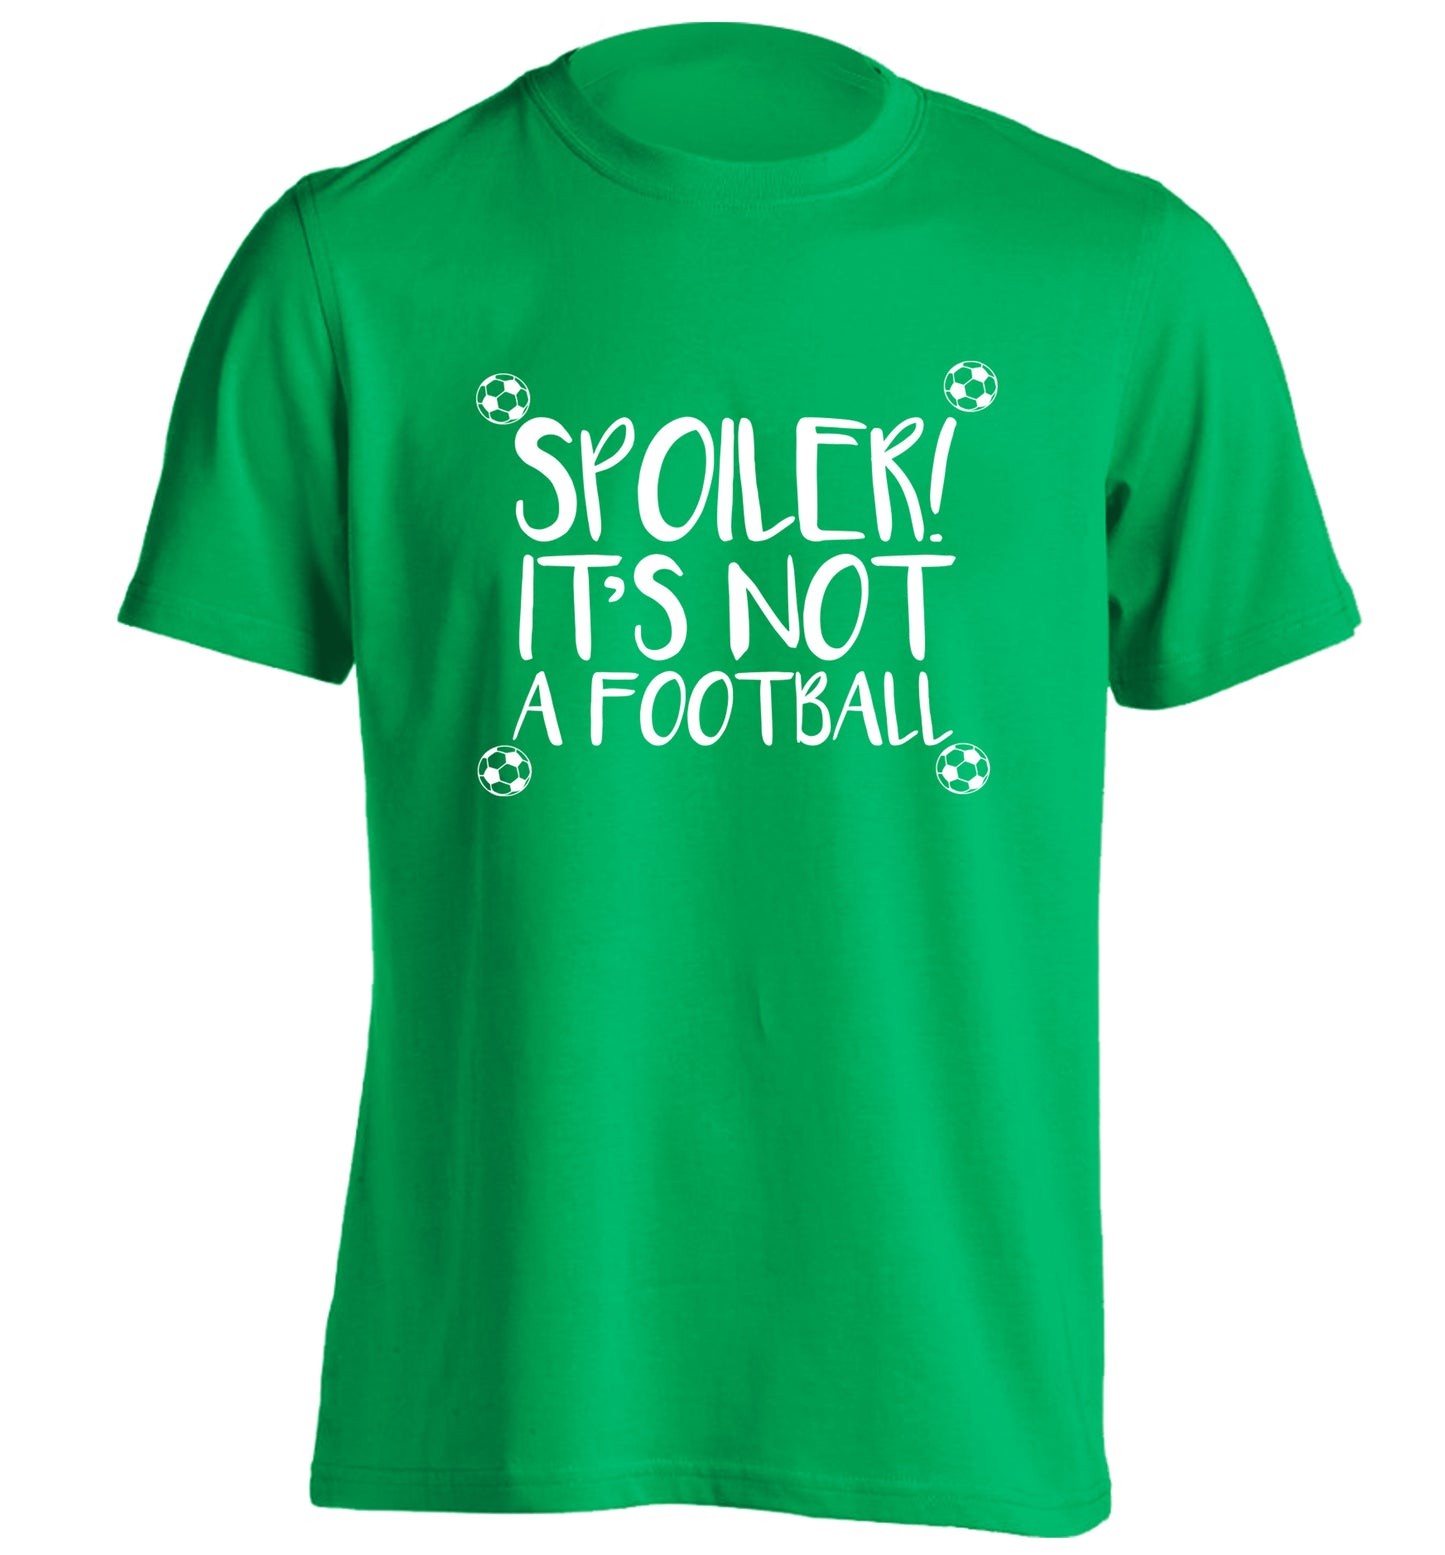 Spoiler it's not a football adults unisex green Tshirt 2XL